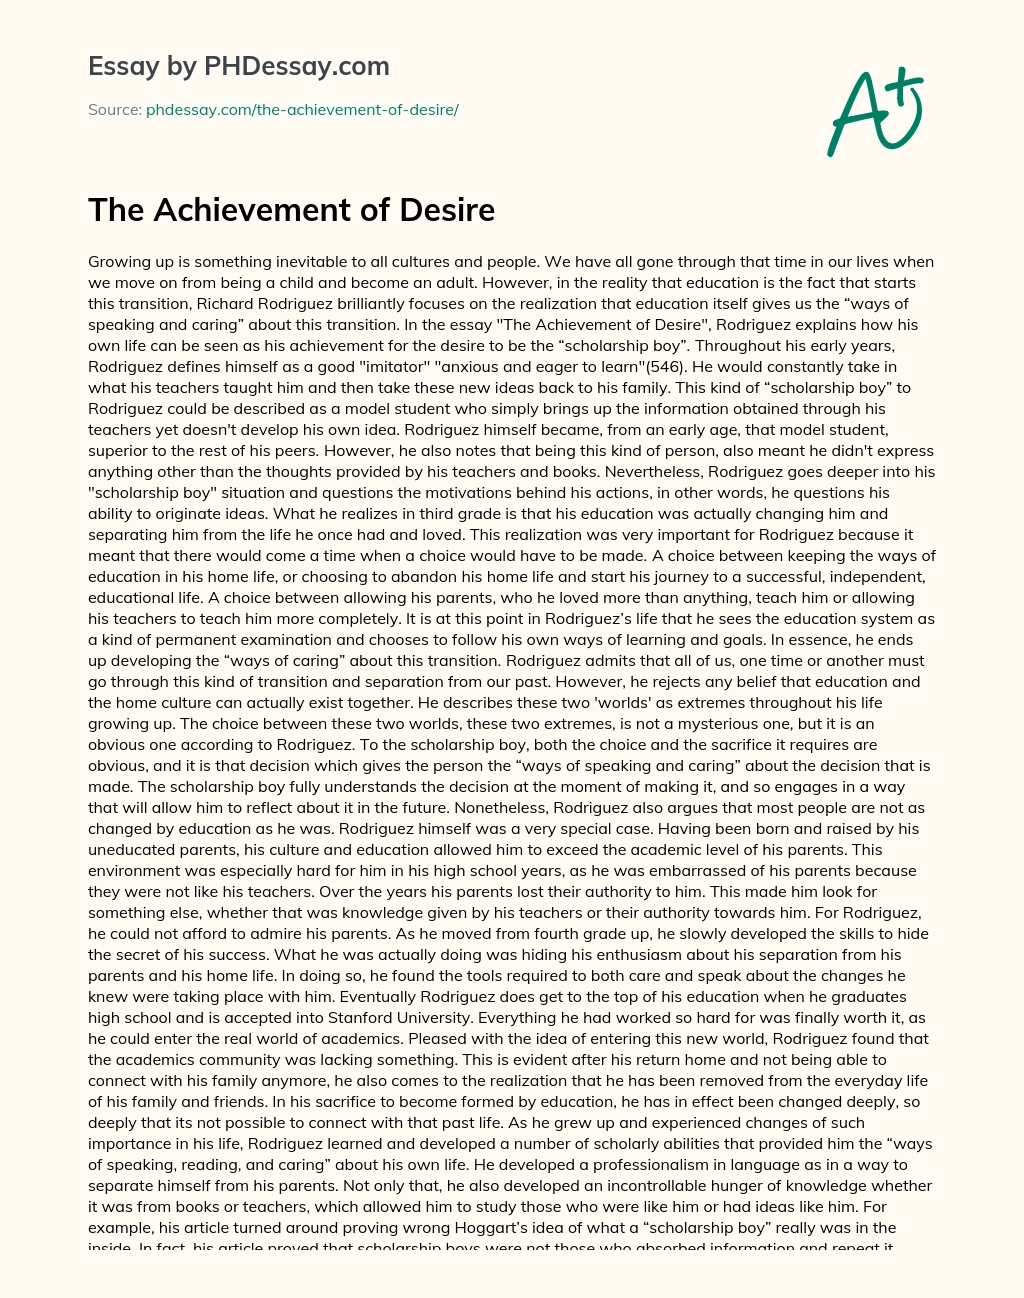 The Achievement of Desire essay